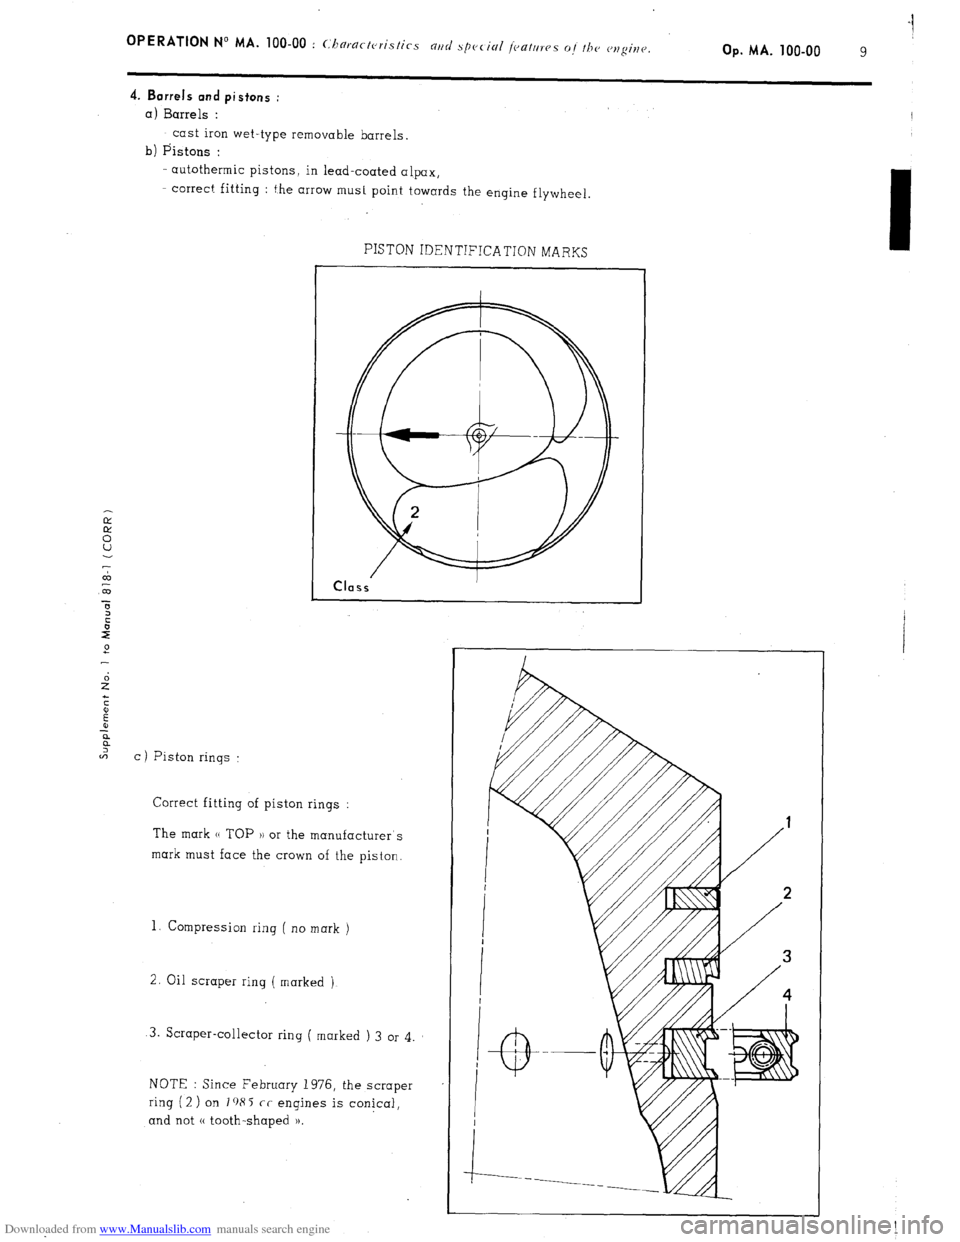 Citroen CX 1977 1.G Repair Manual Downloaded from www.Manualslib.com manuals search engine OPERATION N” MA. 100-00 : (:hnractc,ri.stics arid specinl j(,atrlres o,/ the> cl,gi?lcJ. Op. MA. 100-00 1 
9 
4. Barrels and pistons : 
a) 
B